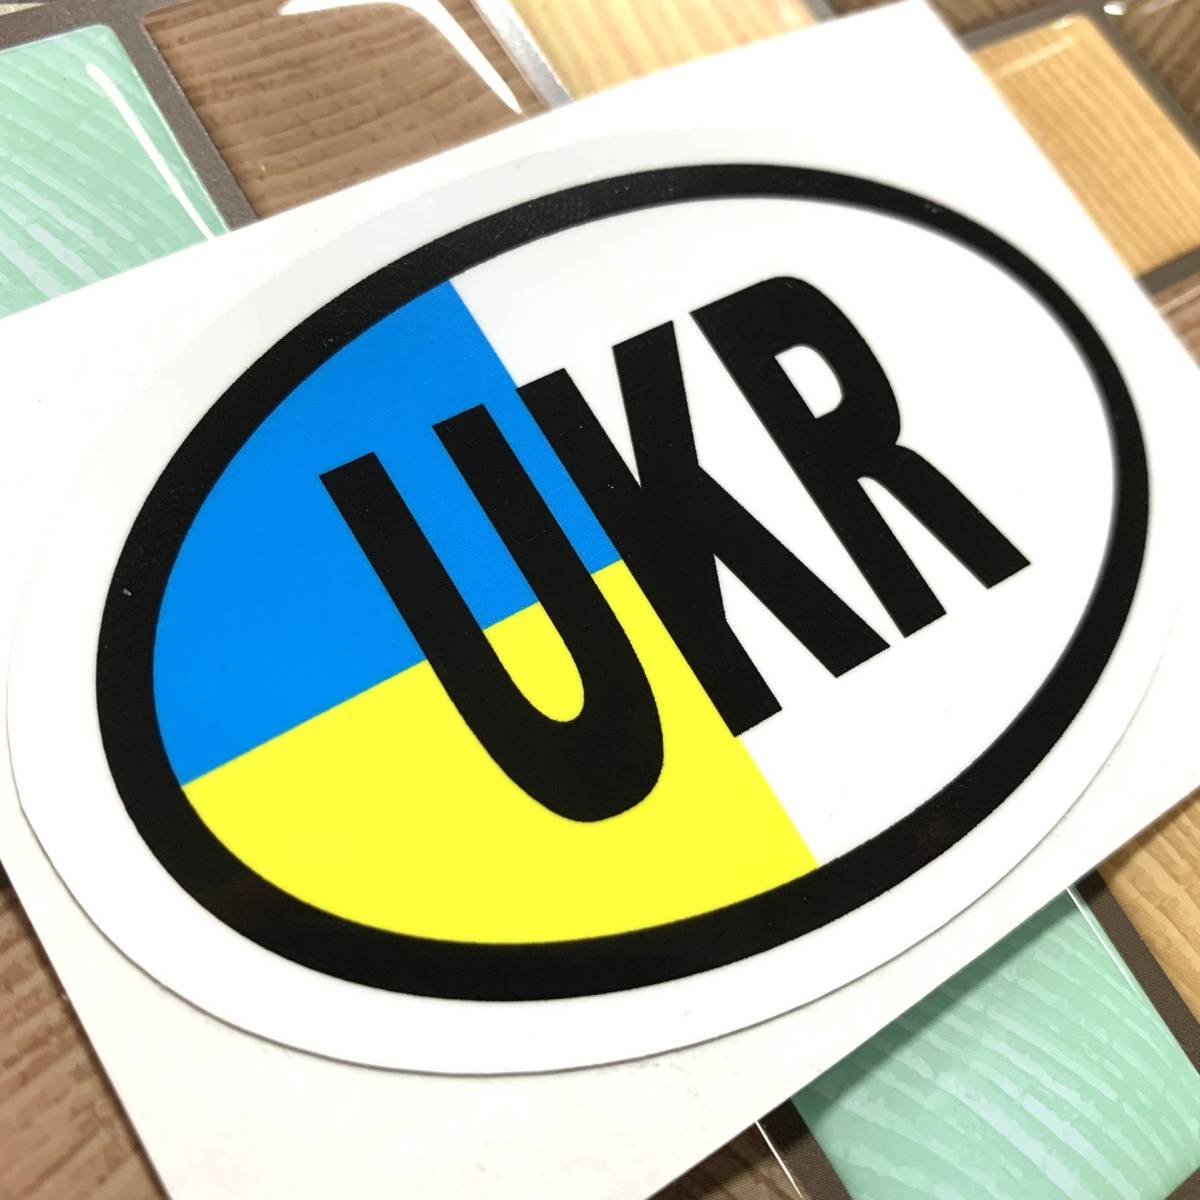 0cM●ウクライナ国旗ステッカー●sizeM 8.5x12cm 楕円 屋外OK オリジナル 耐候 耐水 耐UV デカール シール 車やスーツケースに 応援 EU_画像1